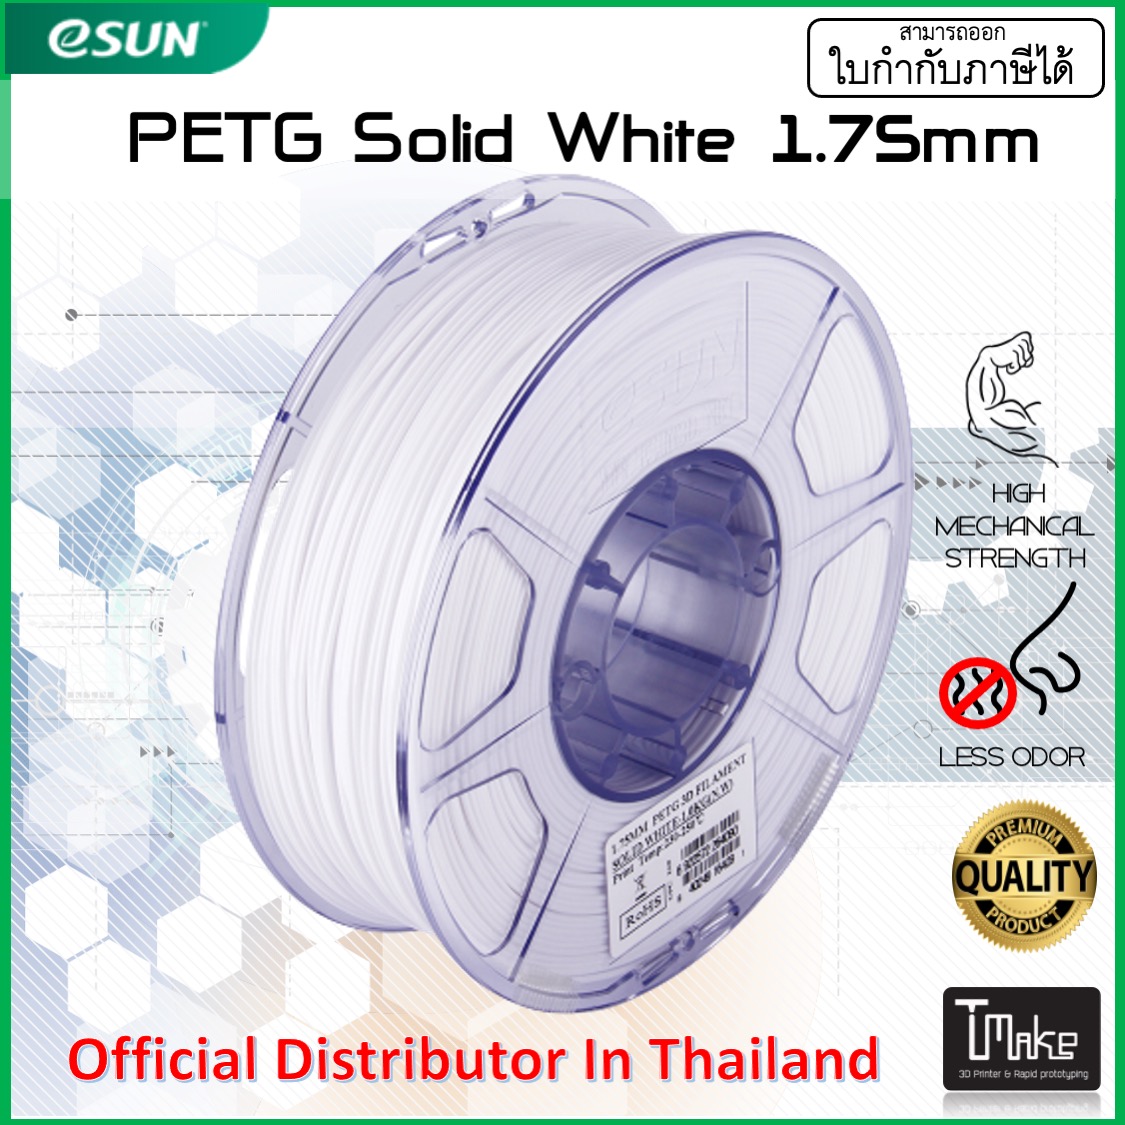 eSUN Filament PETG Solid White Size 1.75mm for 3D Printer